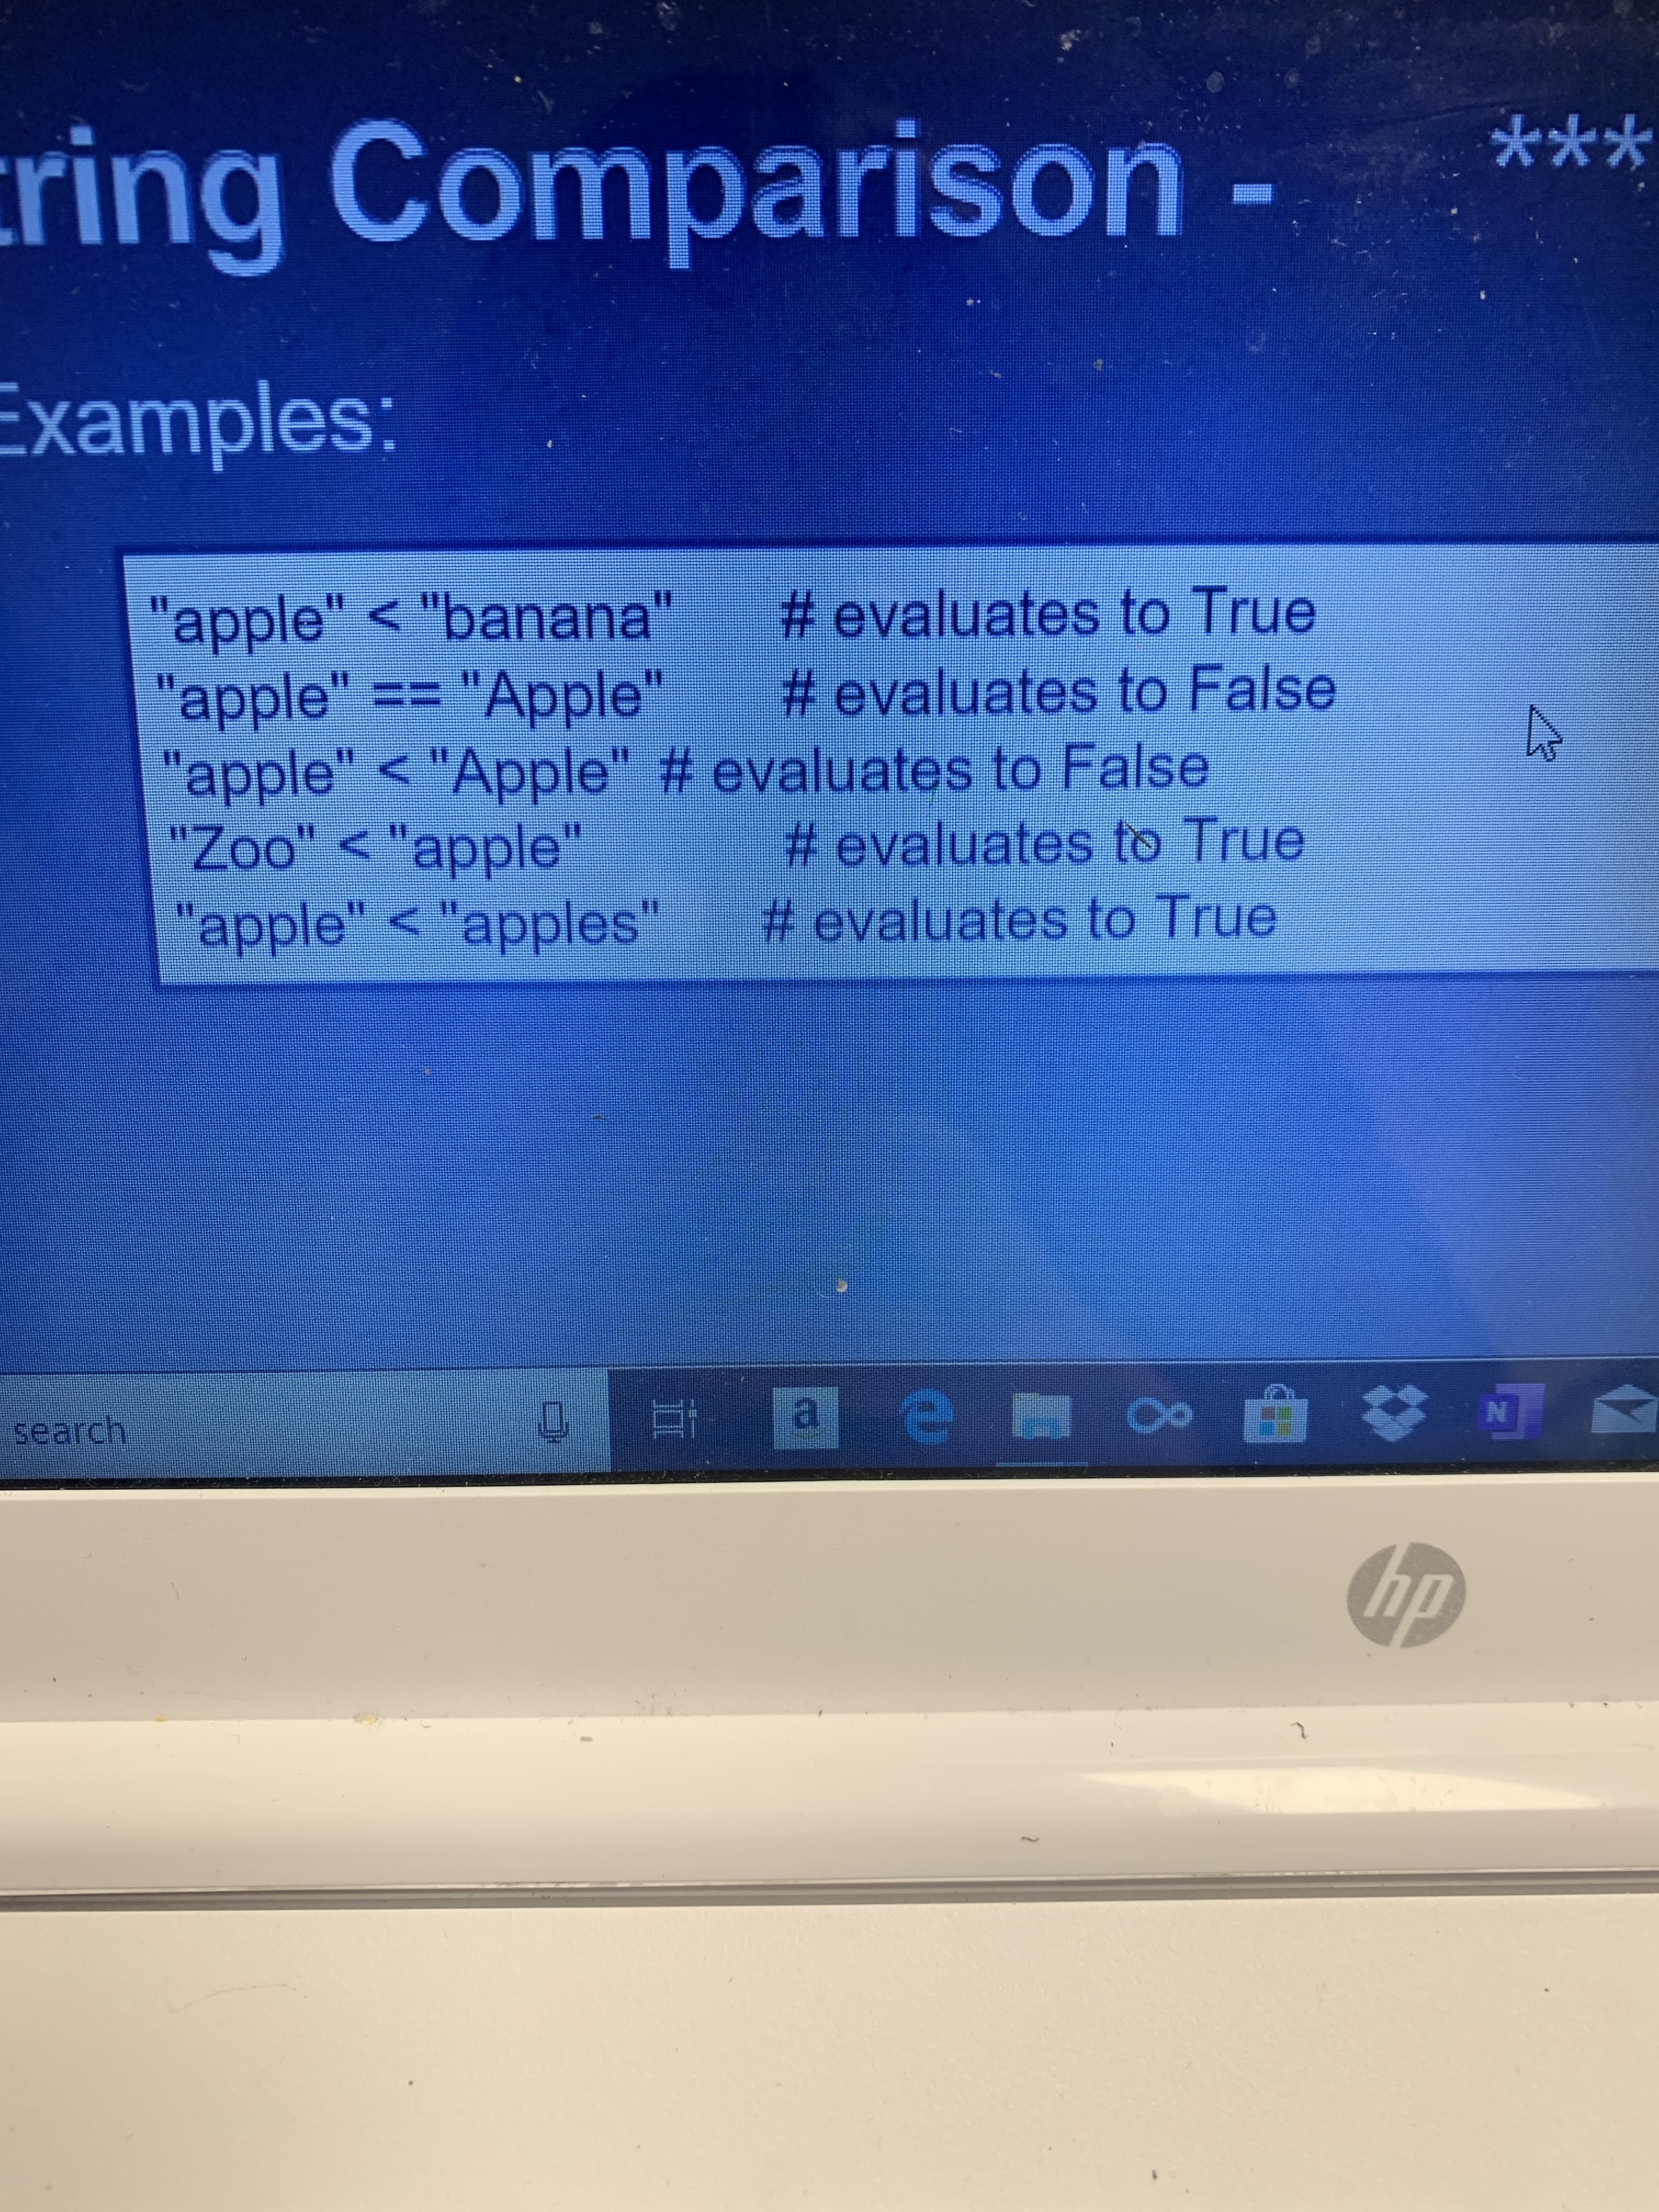 ***
ring Comparison
Examples:
# evaluates to True
# evaluates to False
"apple" < "banana"
"apple" == "Apple"
"apple" < "Apple" # evaluates to False
"Zoo" < "apple"
"apple" < "apples" #evaluates to True
11
# evaluates to True
N
a e oo
search
hp
2
